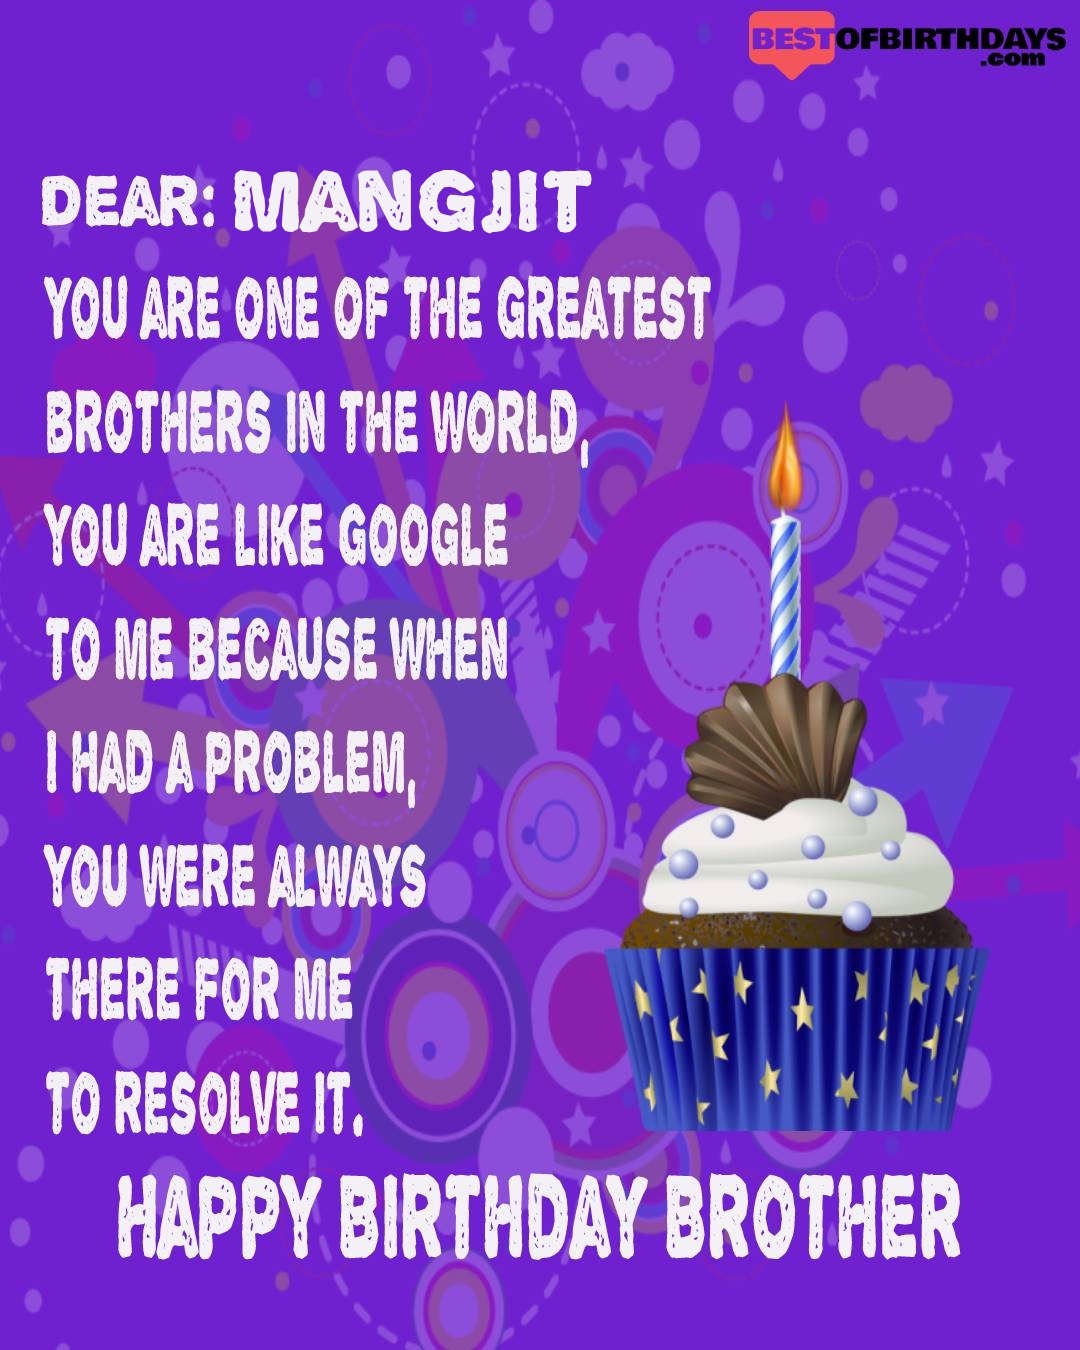 Happy birthday mangjit bhai brother bro